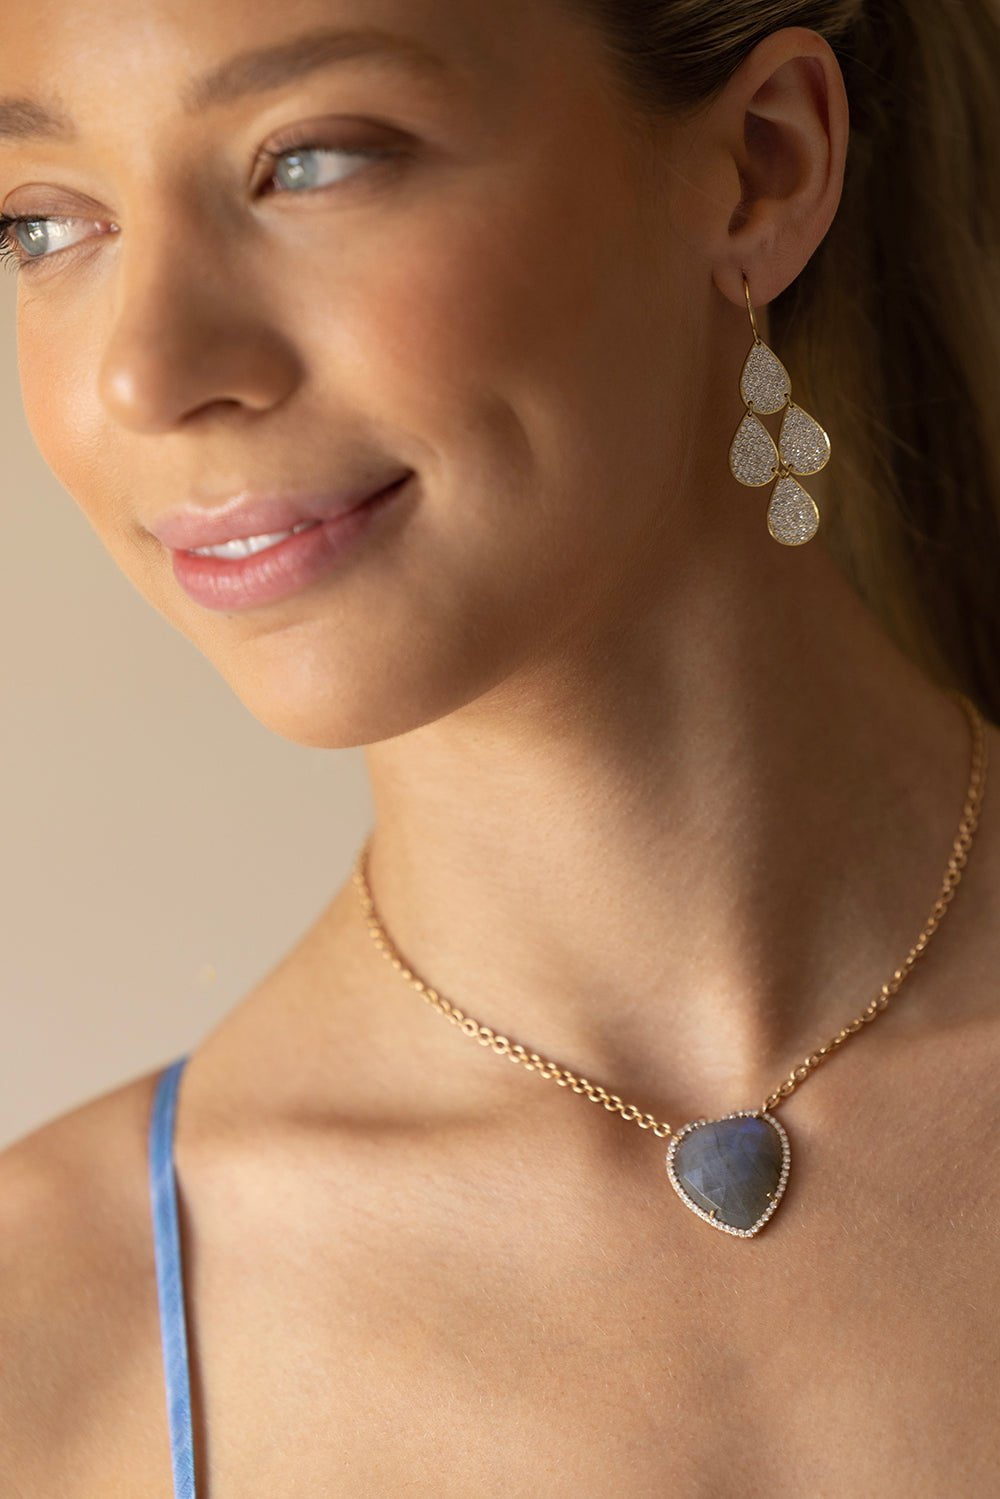 IRENE NEUWIRTH JEWELRY-Labradorite Diamond Heart Necklace-ROSE GOLD